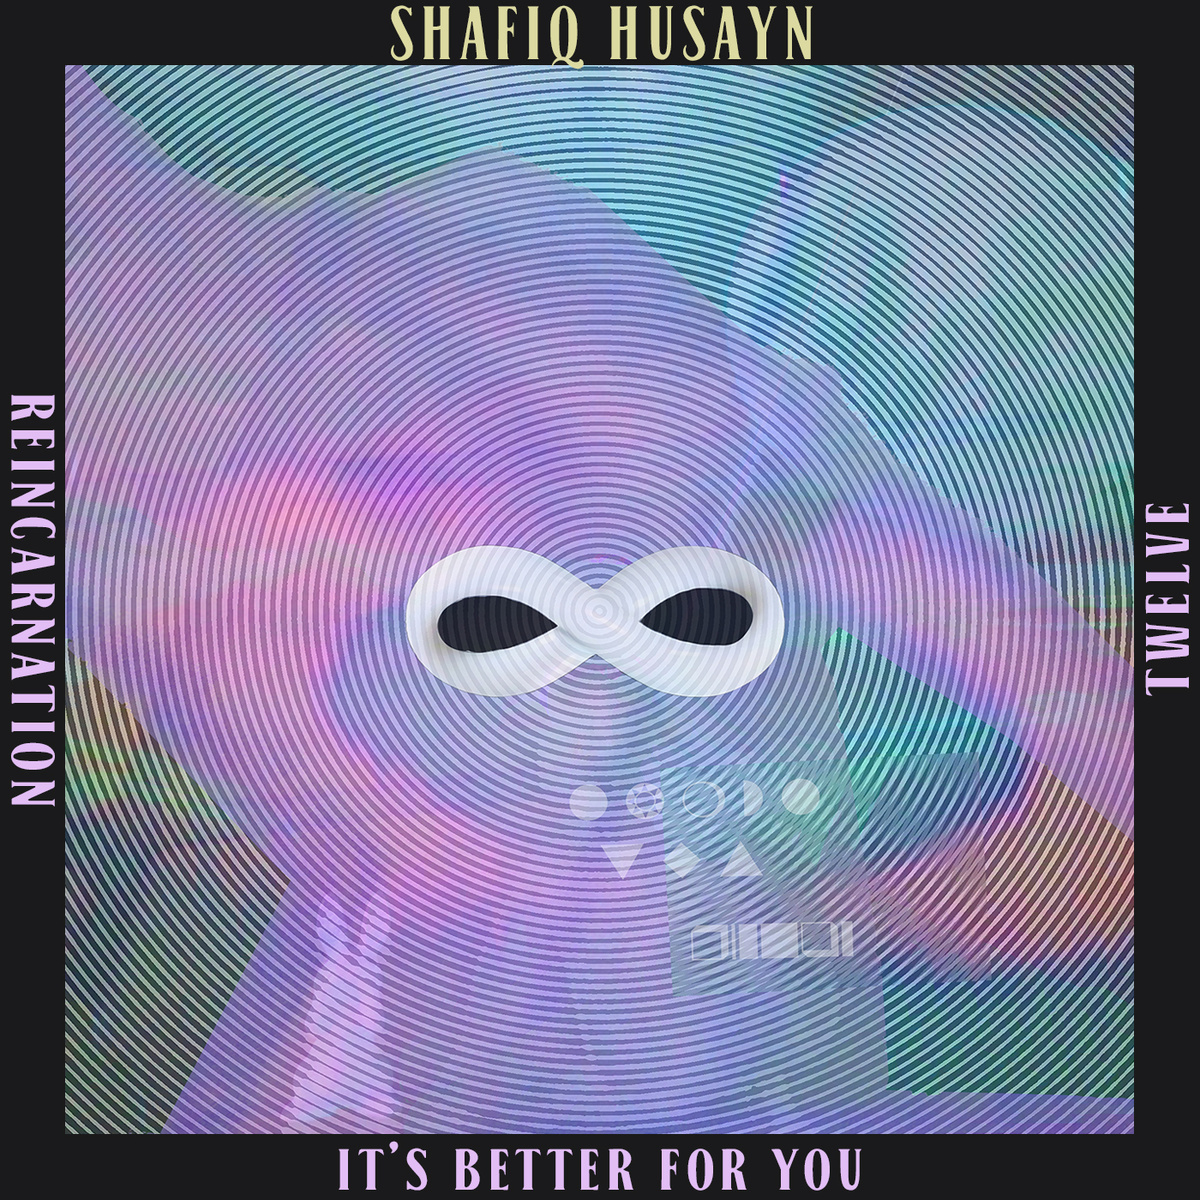 Shafiq Husayn "It's Better For You" Release | @ShafiqHusayn